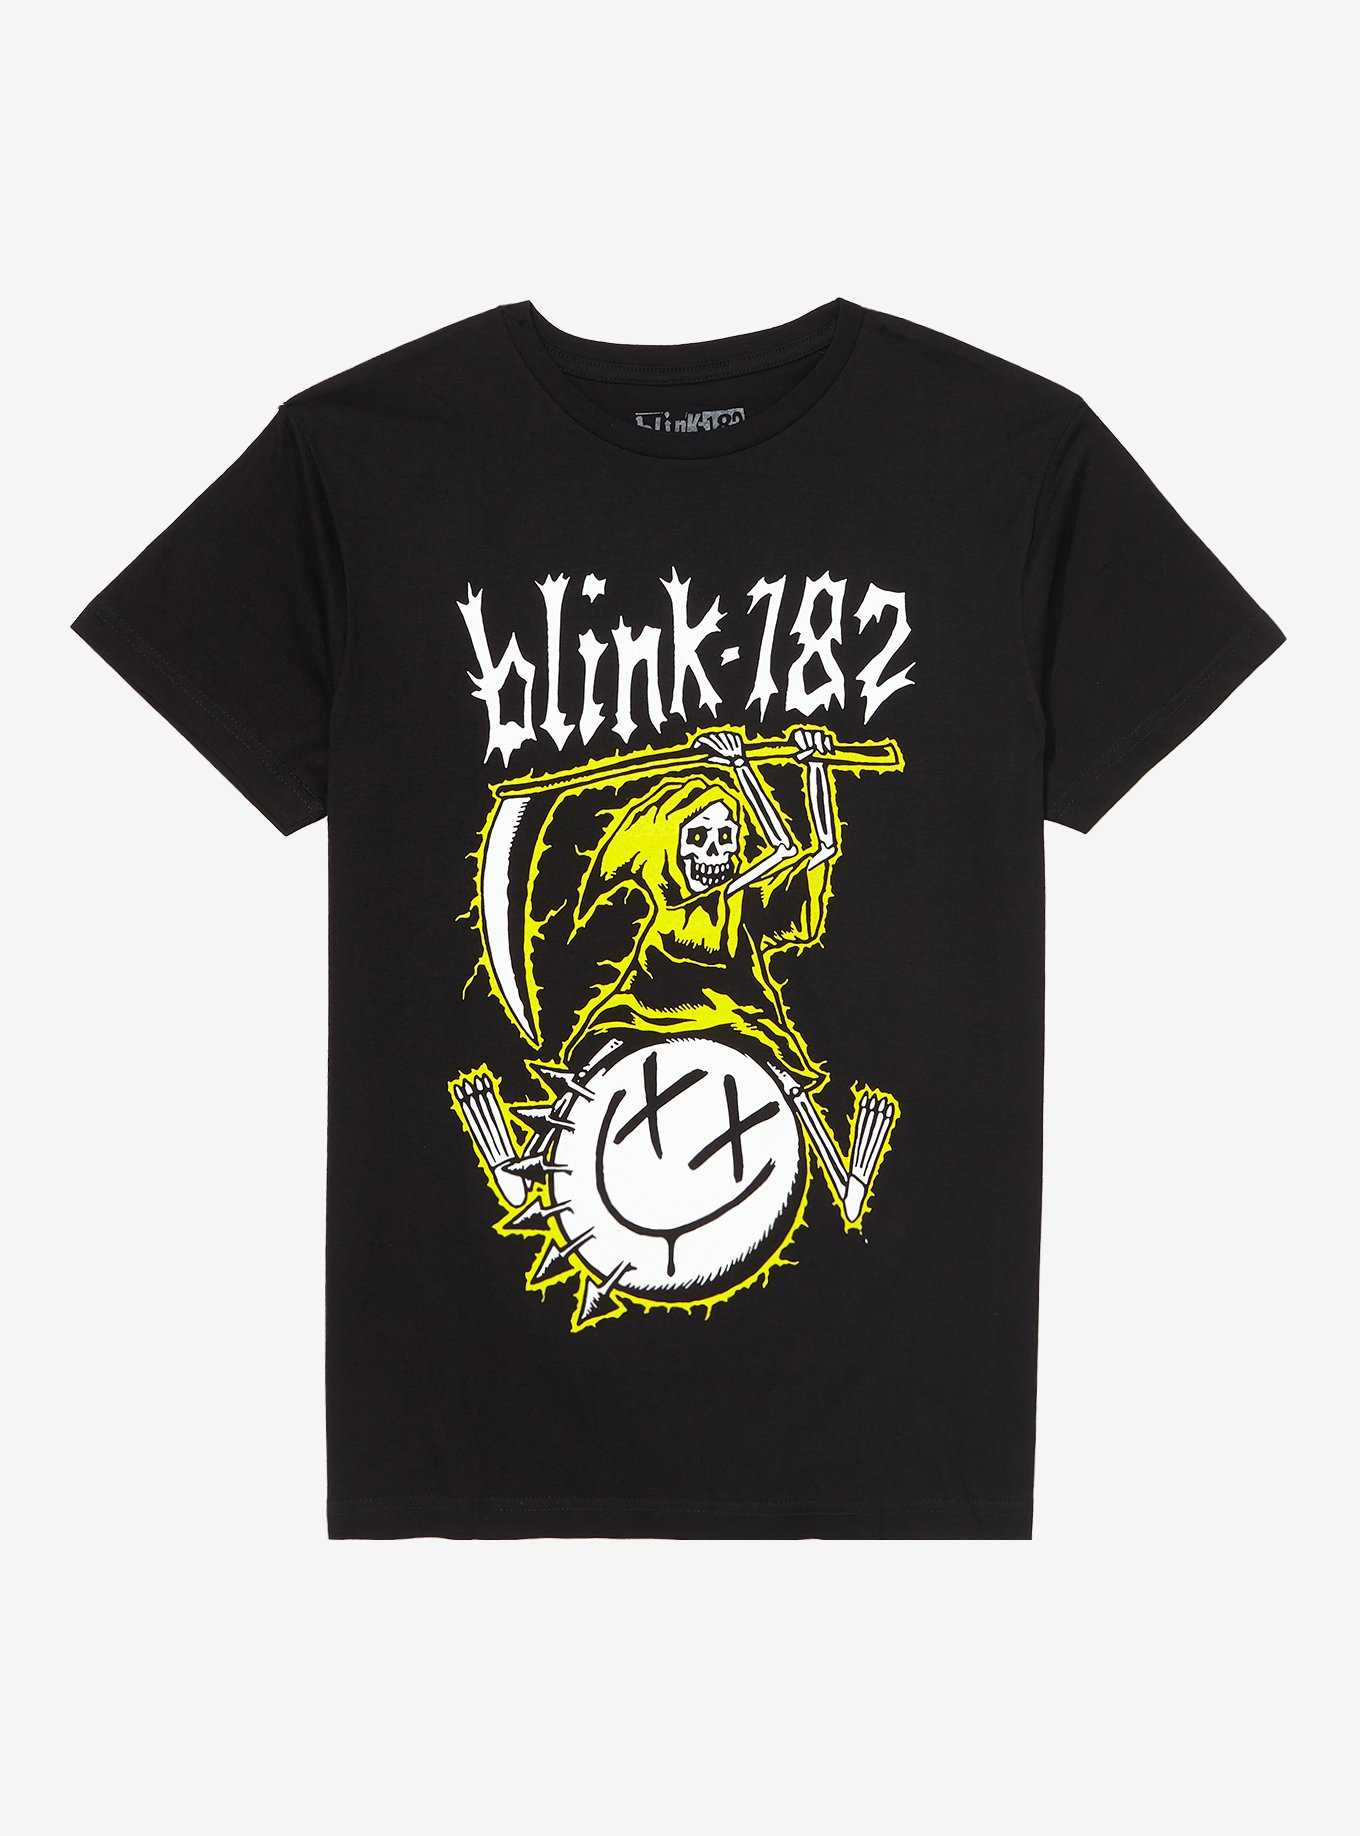 Blink-182 World Tour T-Shirt, , hi-res